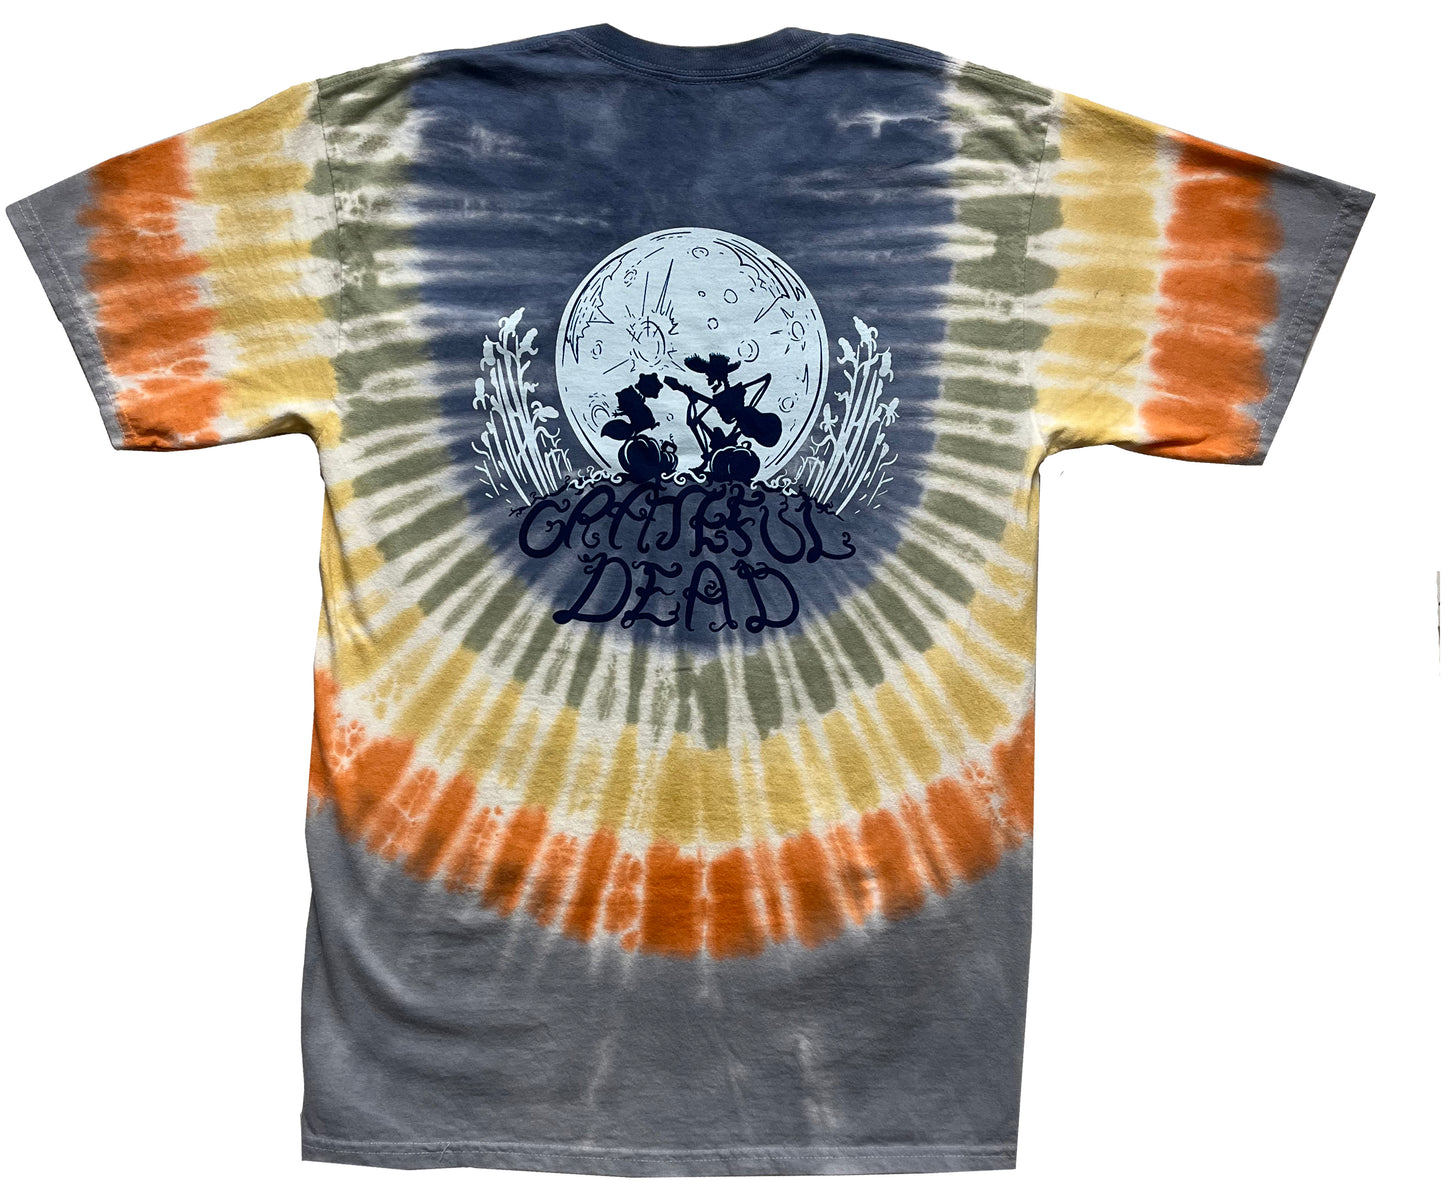 Grateful Dead Harvest Moon t-shirt